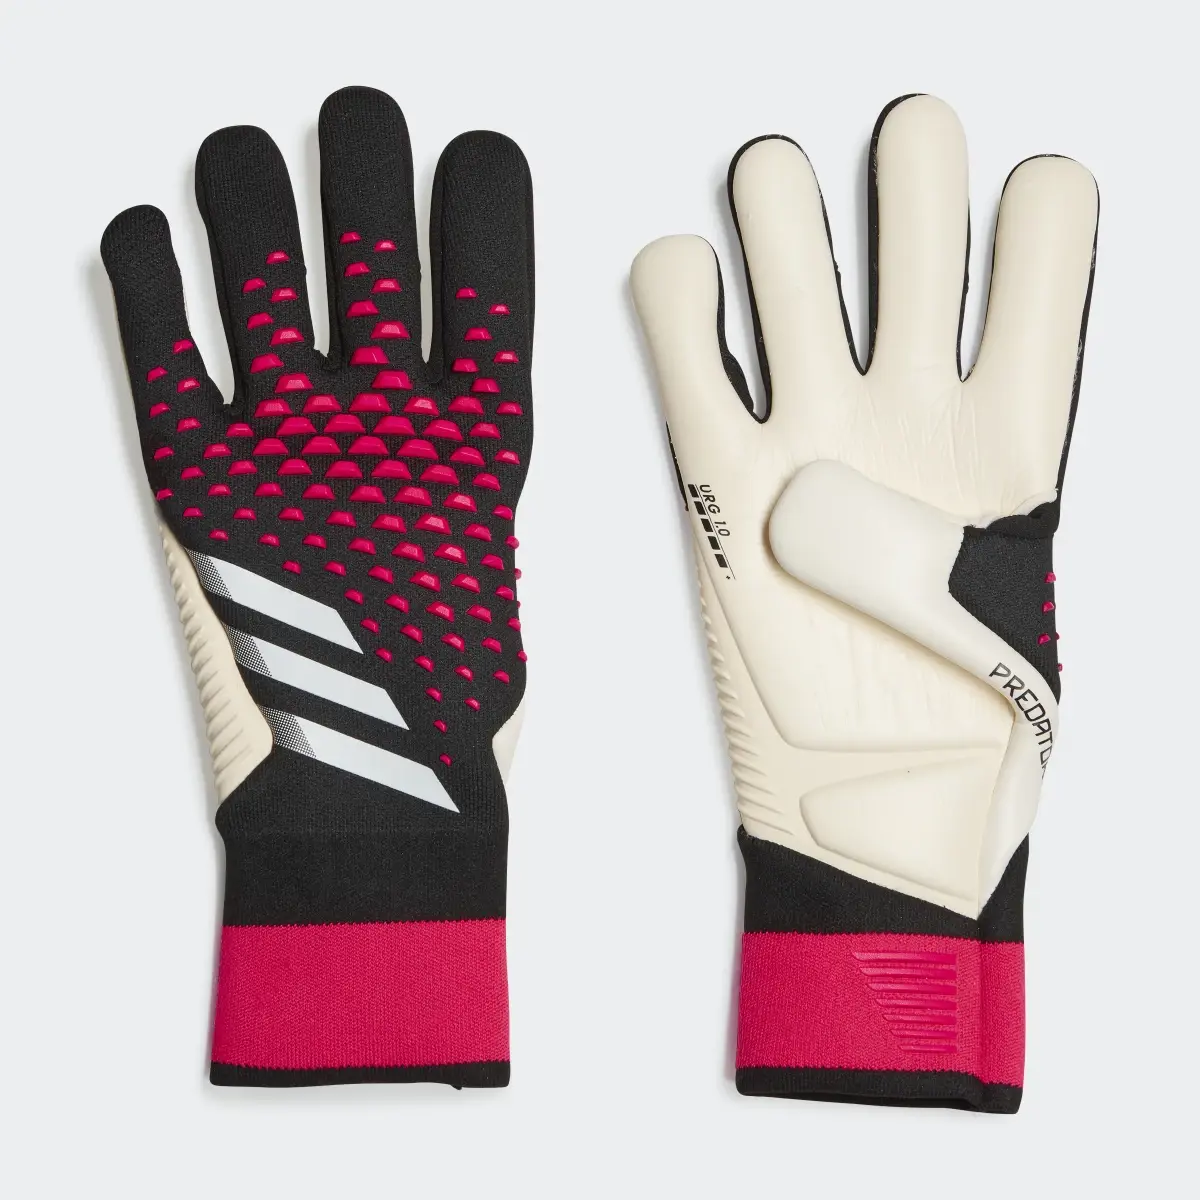 Adidas Predator Pro Promo Goalkeeper Gloves. 3